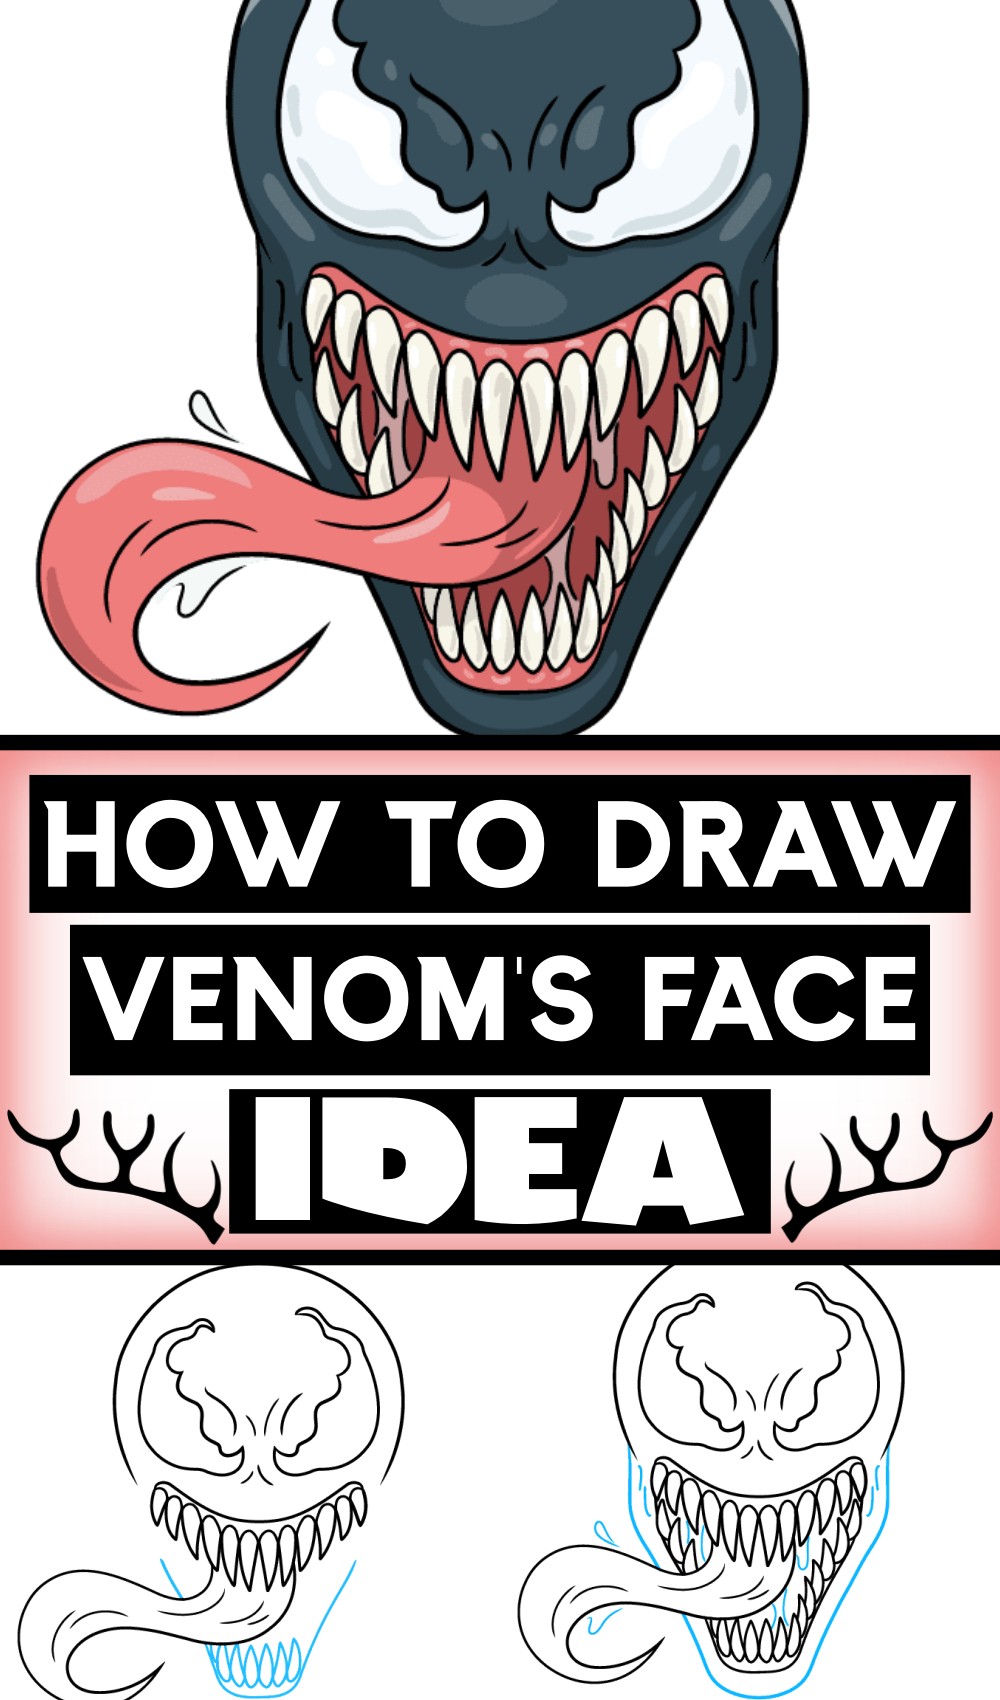 How To Draw Venom's Face